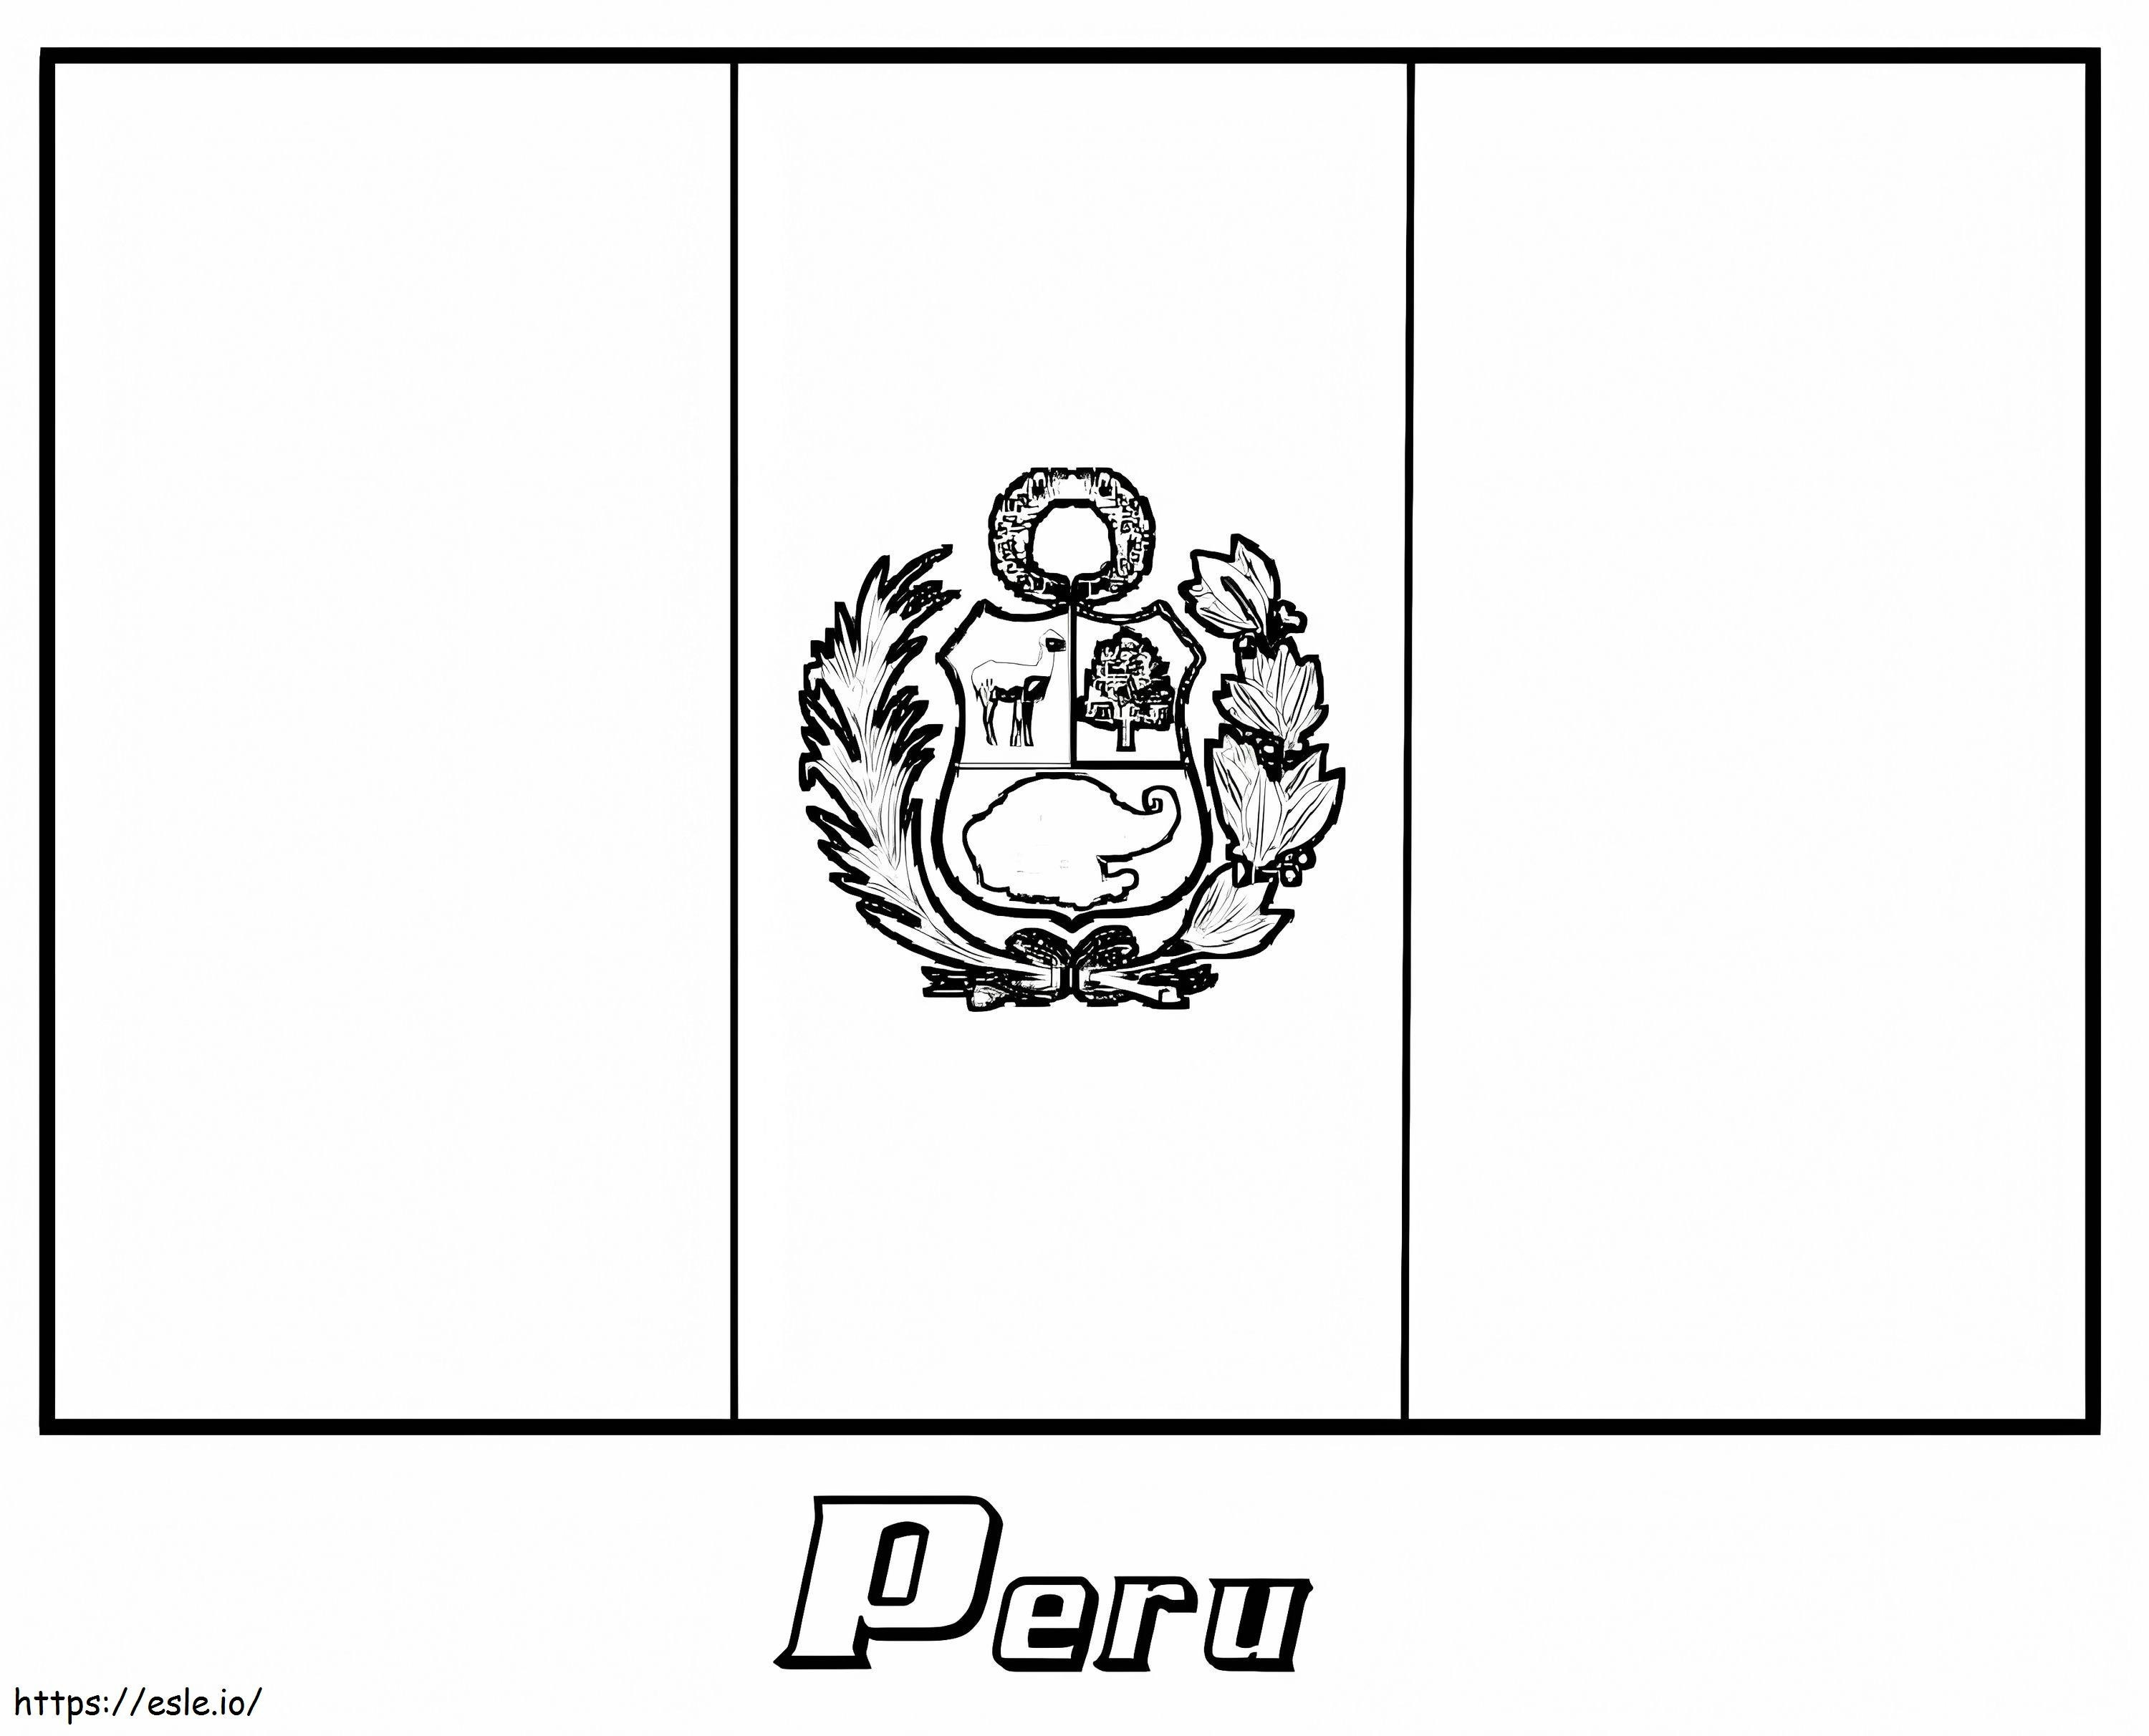 Flaga Peru kolorowanka